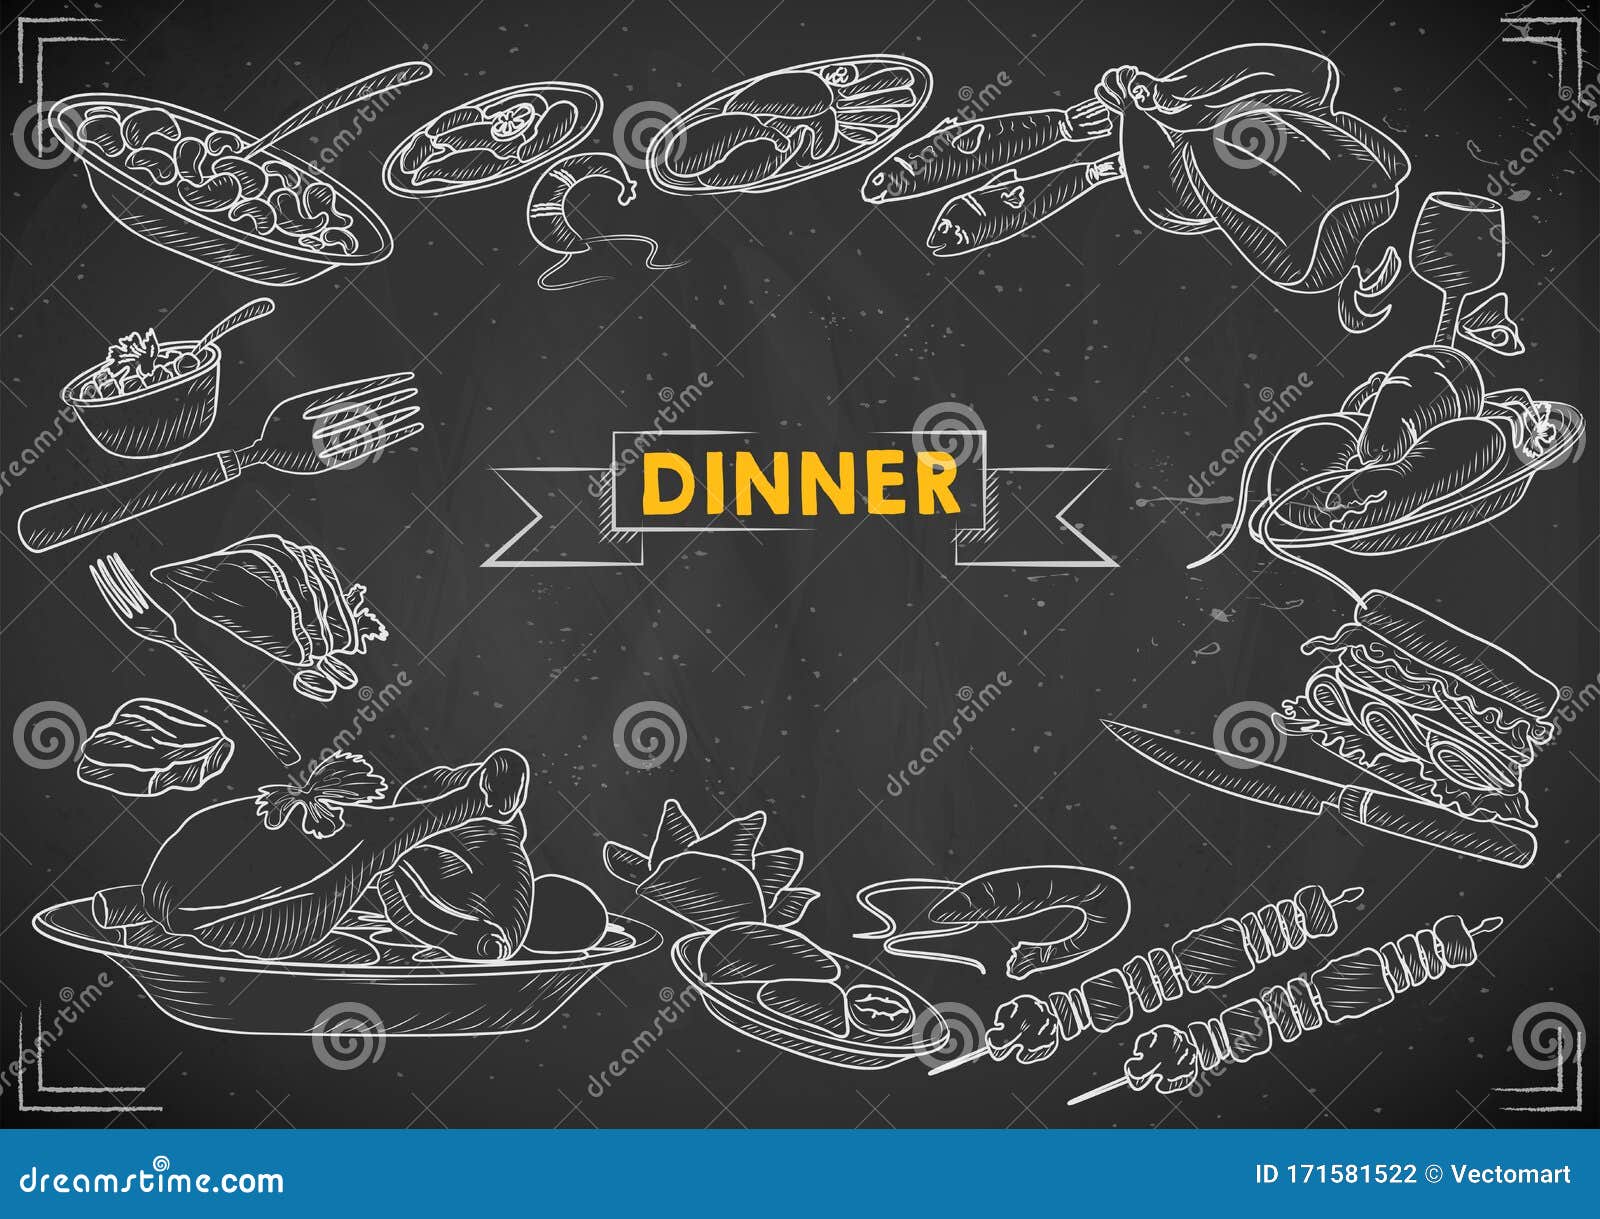 Template of Different Types of Dinner Item for Menu Background Design of  Hotel or Restaurant Stock Vector - Illustration of fresh, chalkboard:  171581522